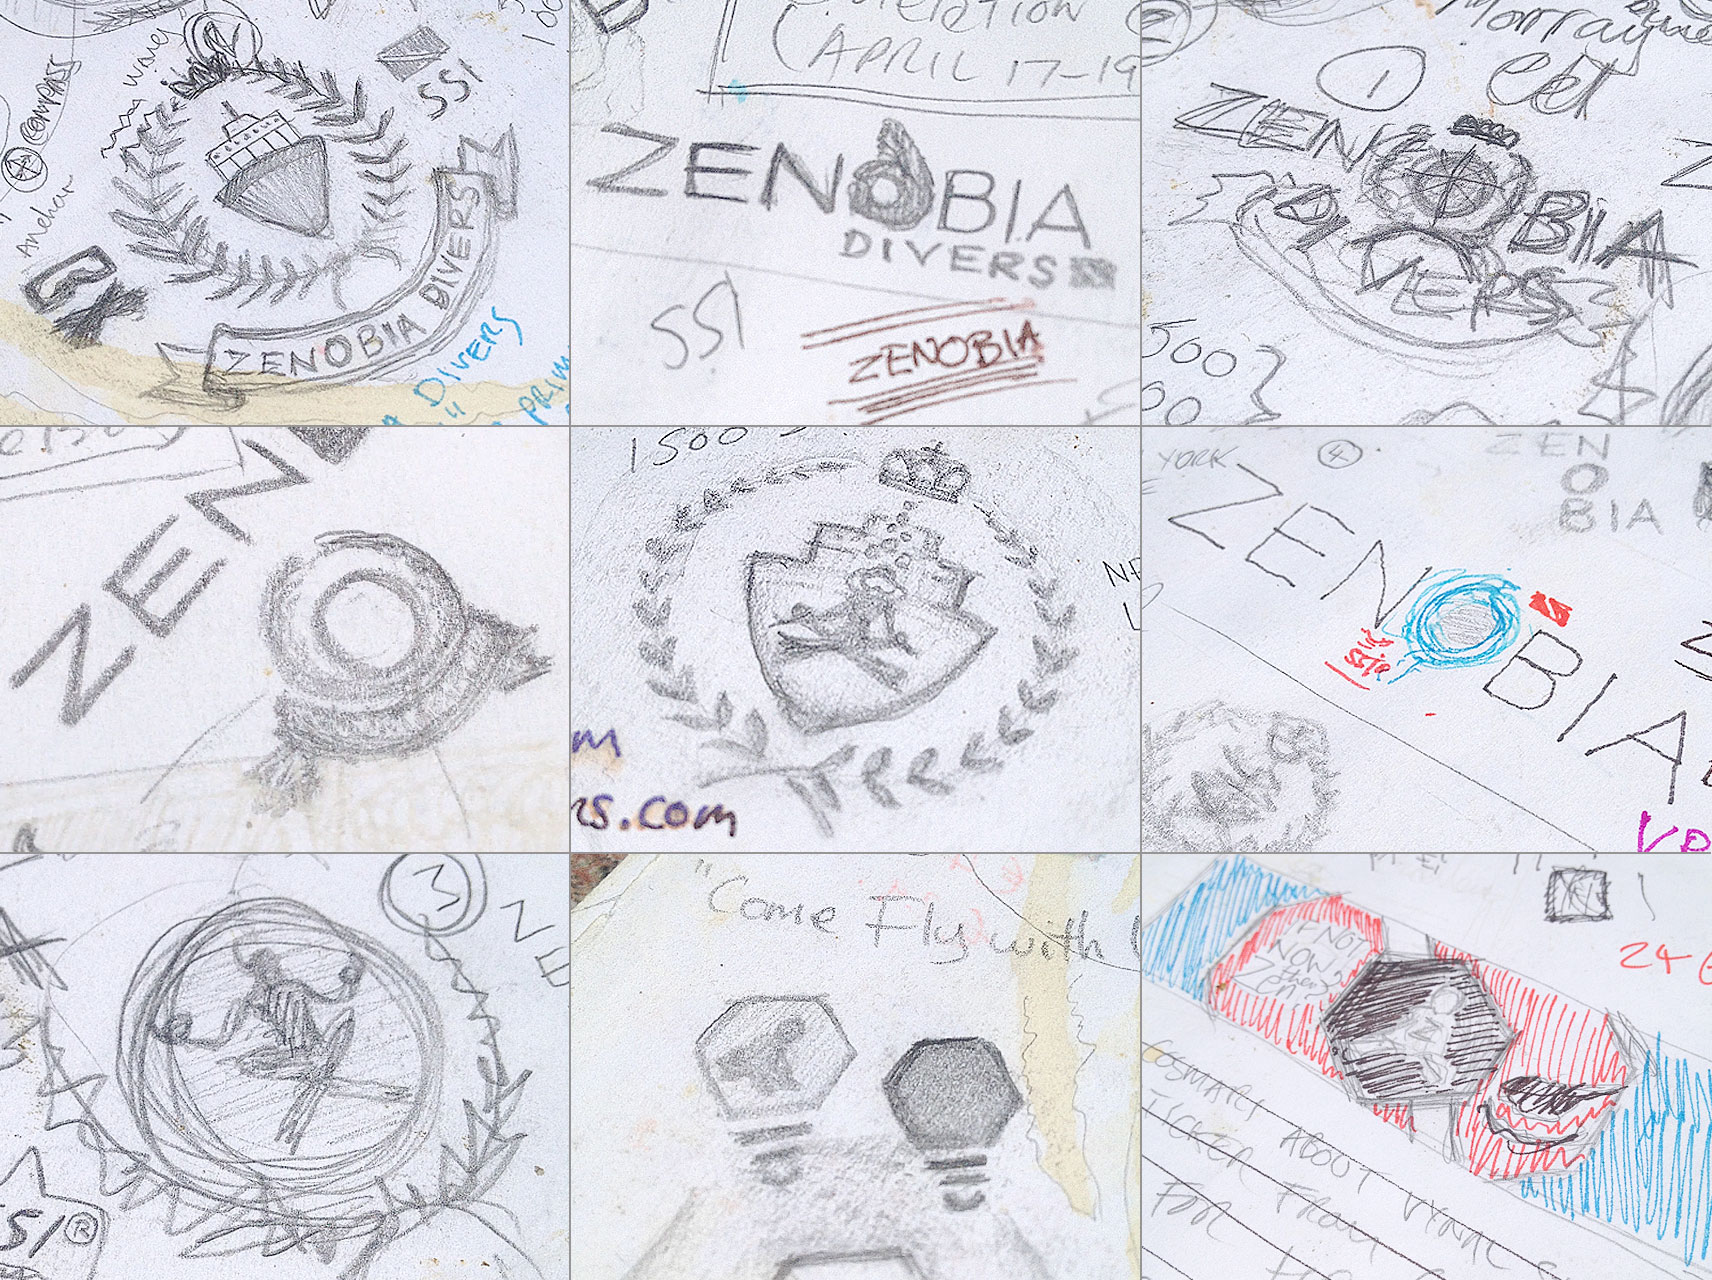 Concept doodles for Zenobia Divers logo.